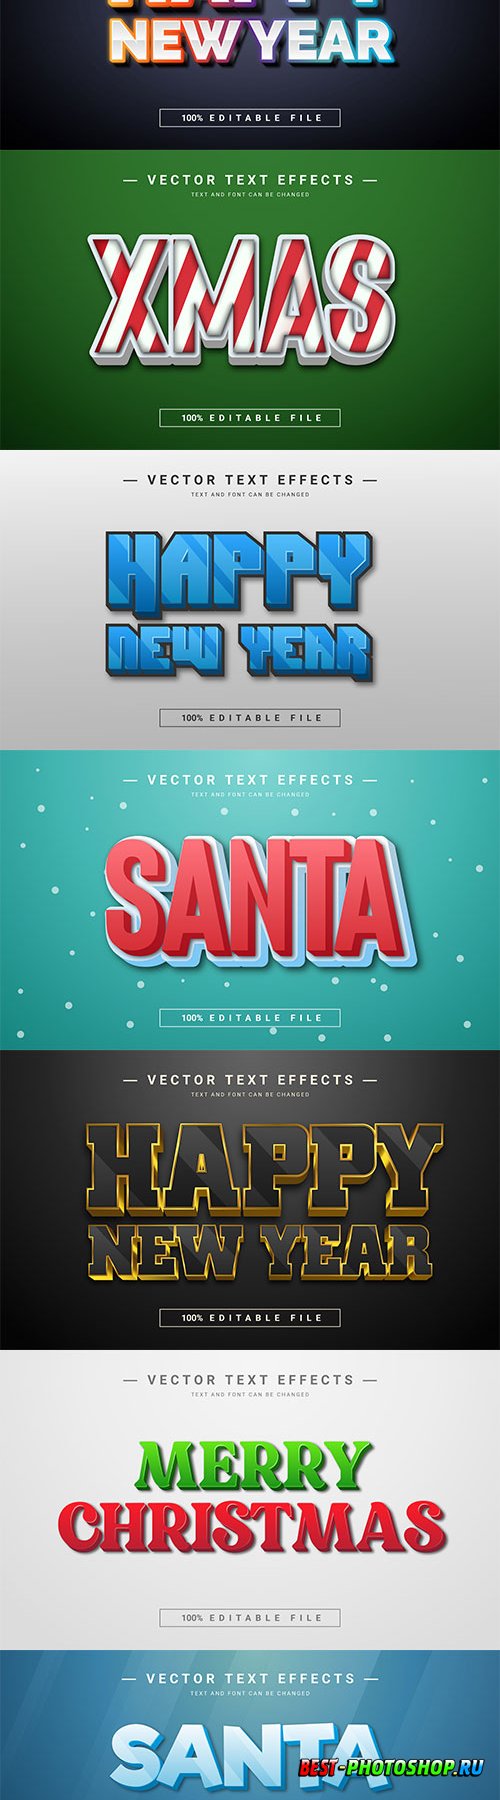 2022 New year, Merry christmas editable text effect premium vector vol 14